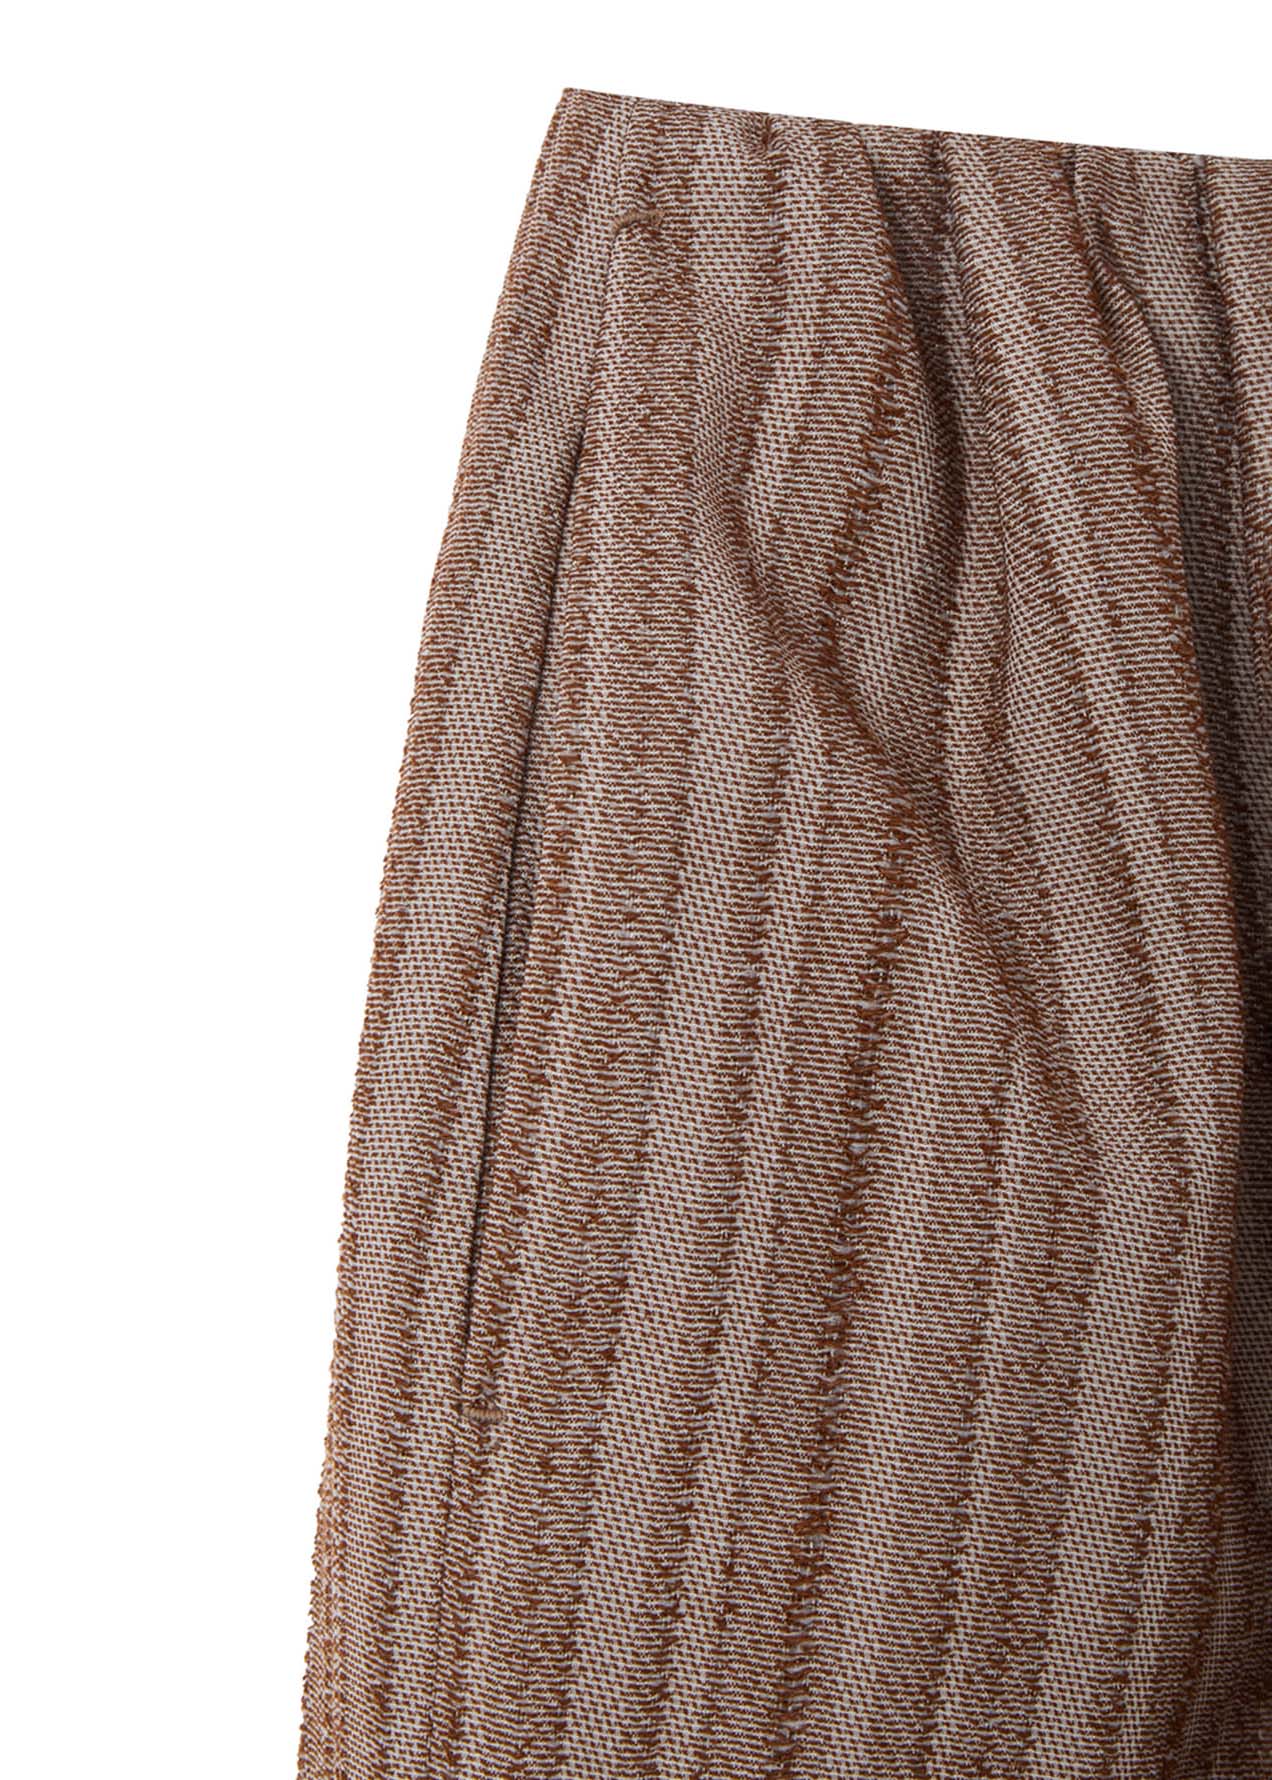 Brown Bubble Miniskirt - 157Moments